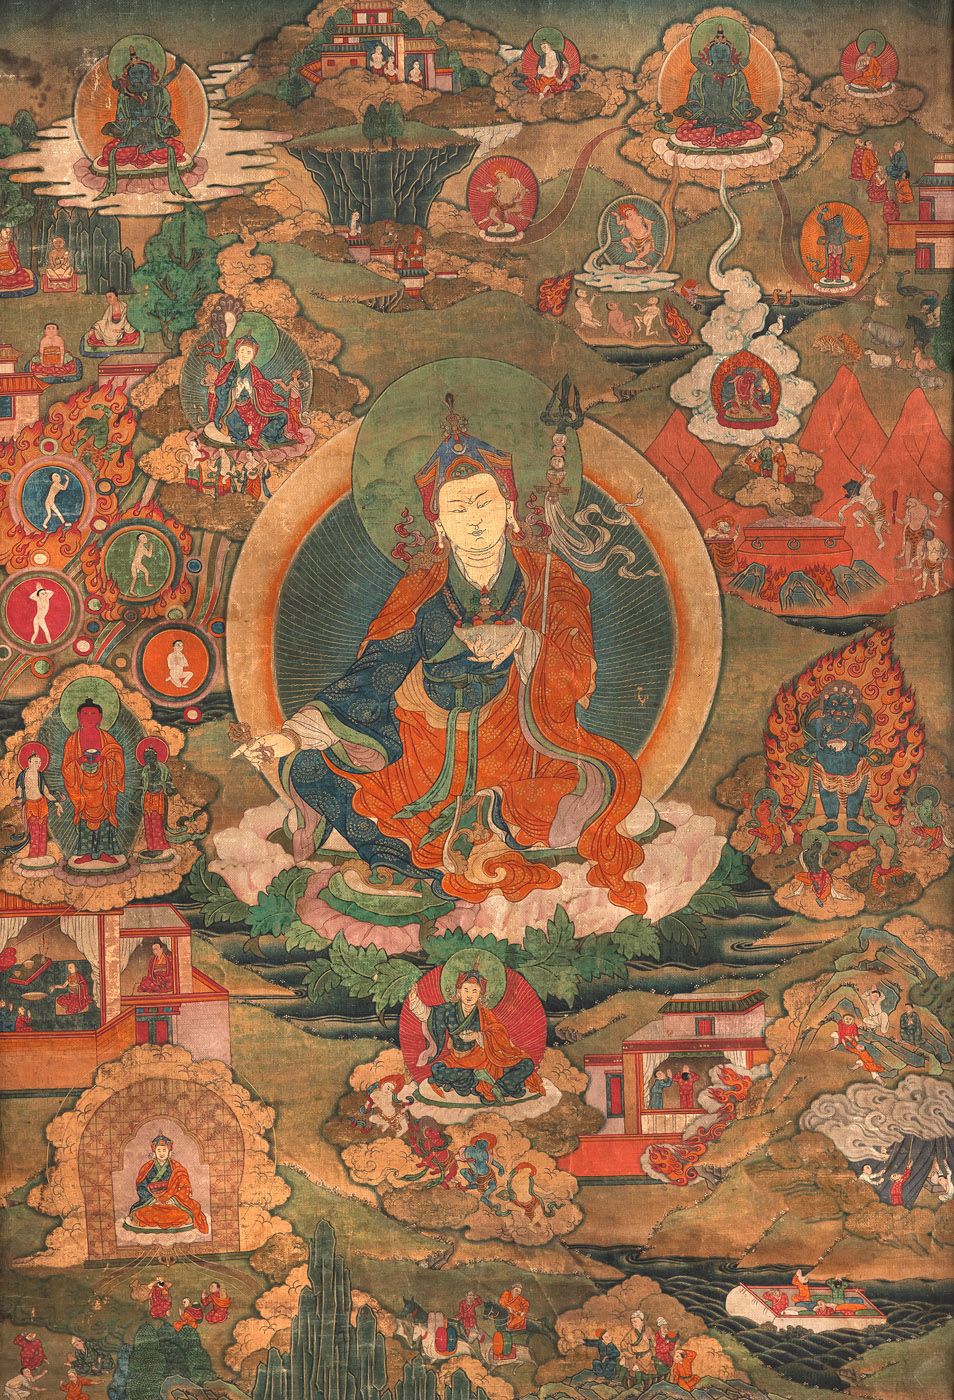 Padmasambhava, "The Precious Guru" as universal helper from all hardships